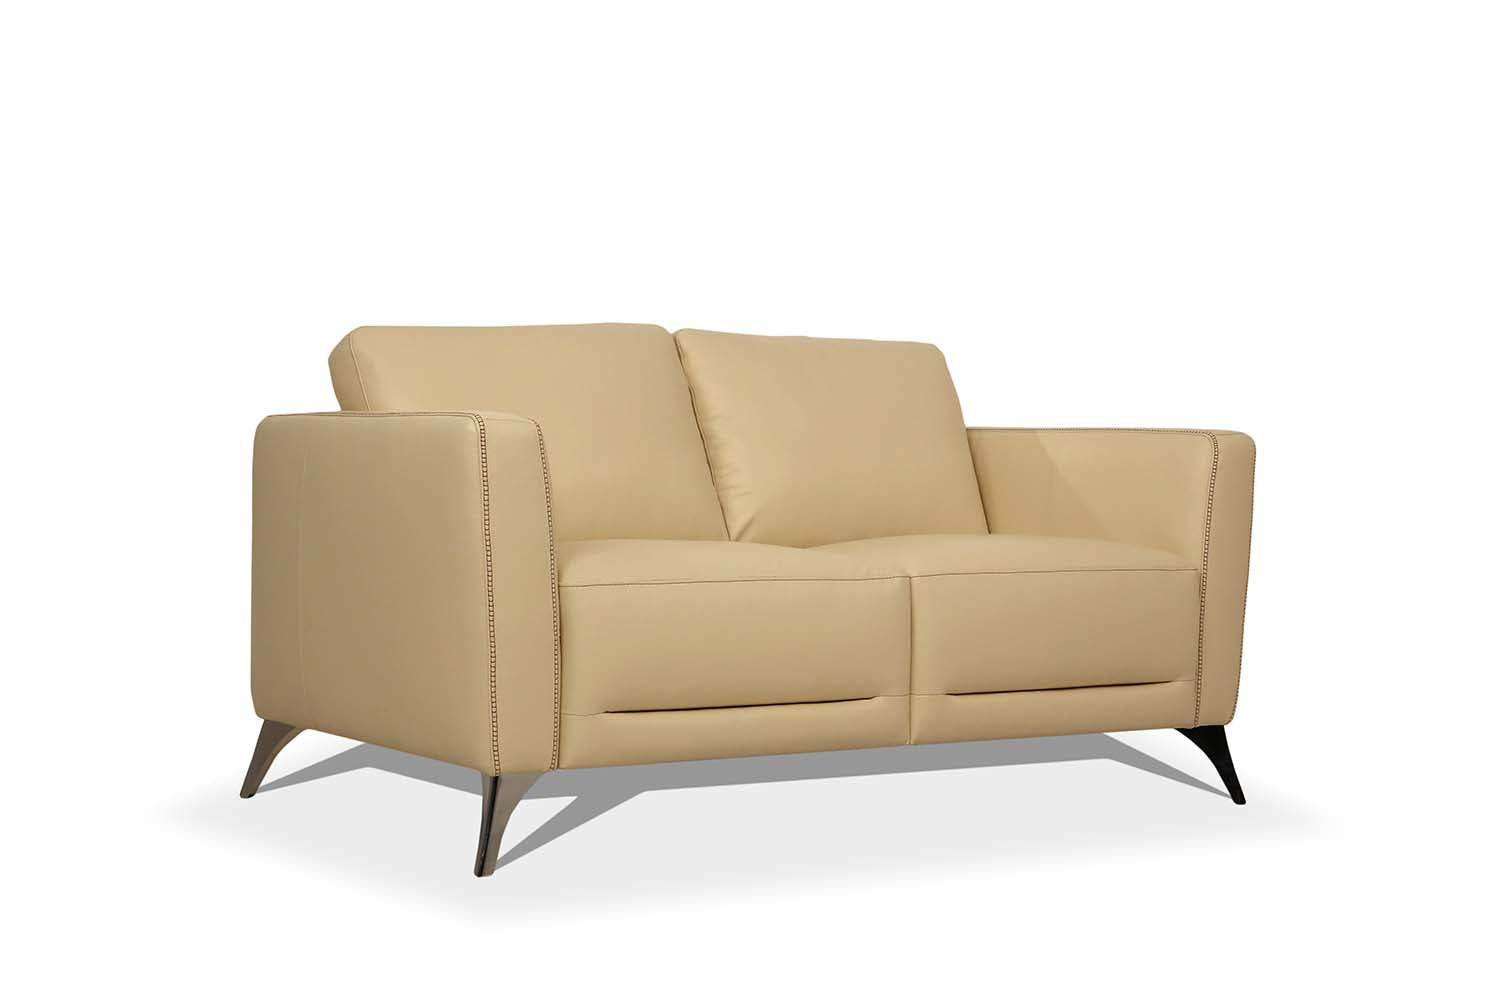 ACME Furniture Sofas & Couches - Loveseat, Cream Leather 55006